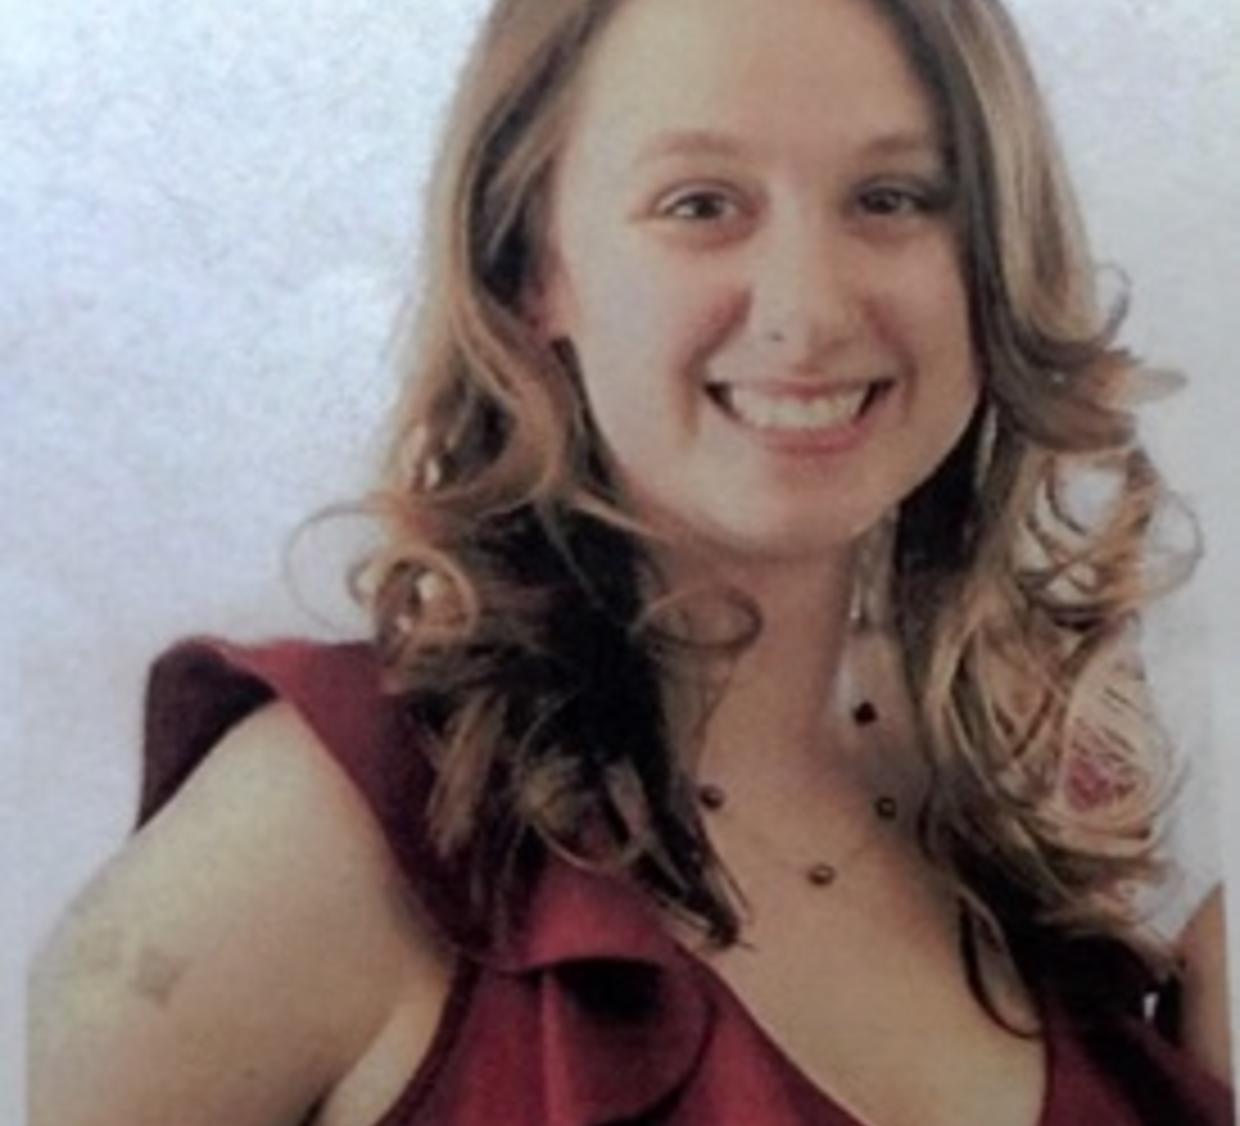 Case Of Missing Farmington Hills Woman Danielle Stislicki Gets National